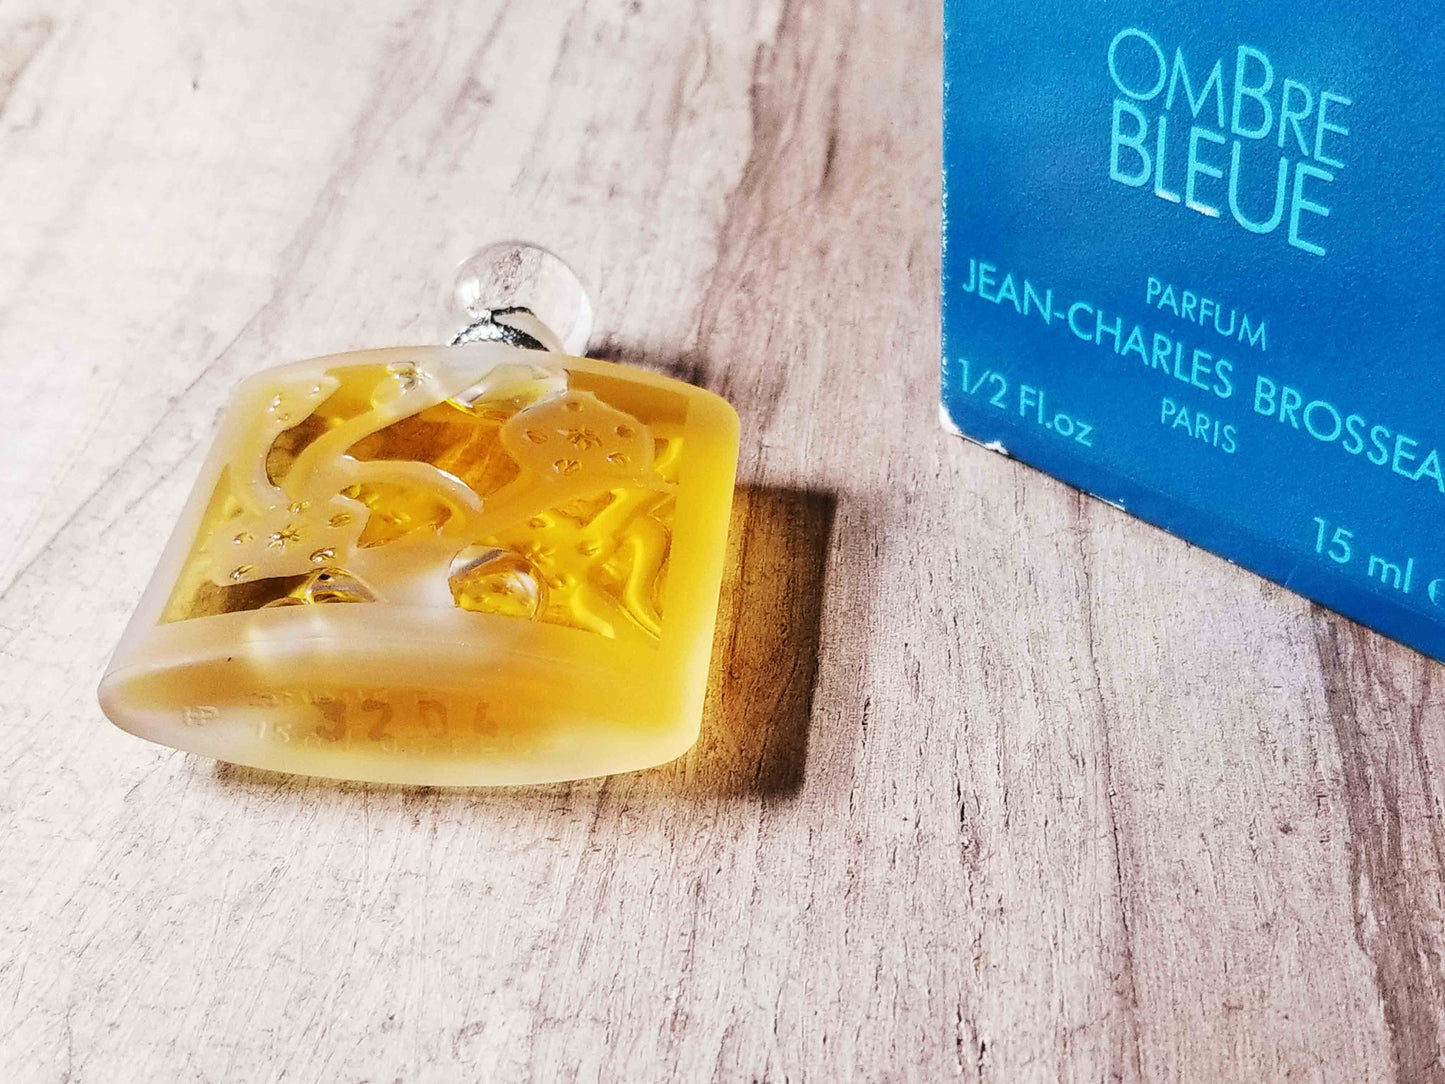 Ombre Bleue by Jean Charles Brosseau Parfum Splash 15 ml, Vintage, Rare